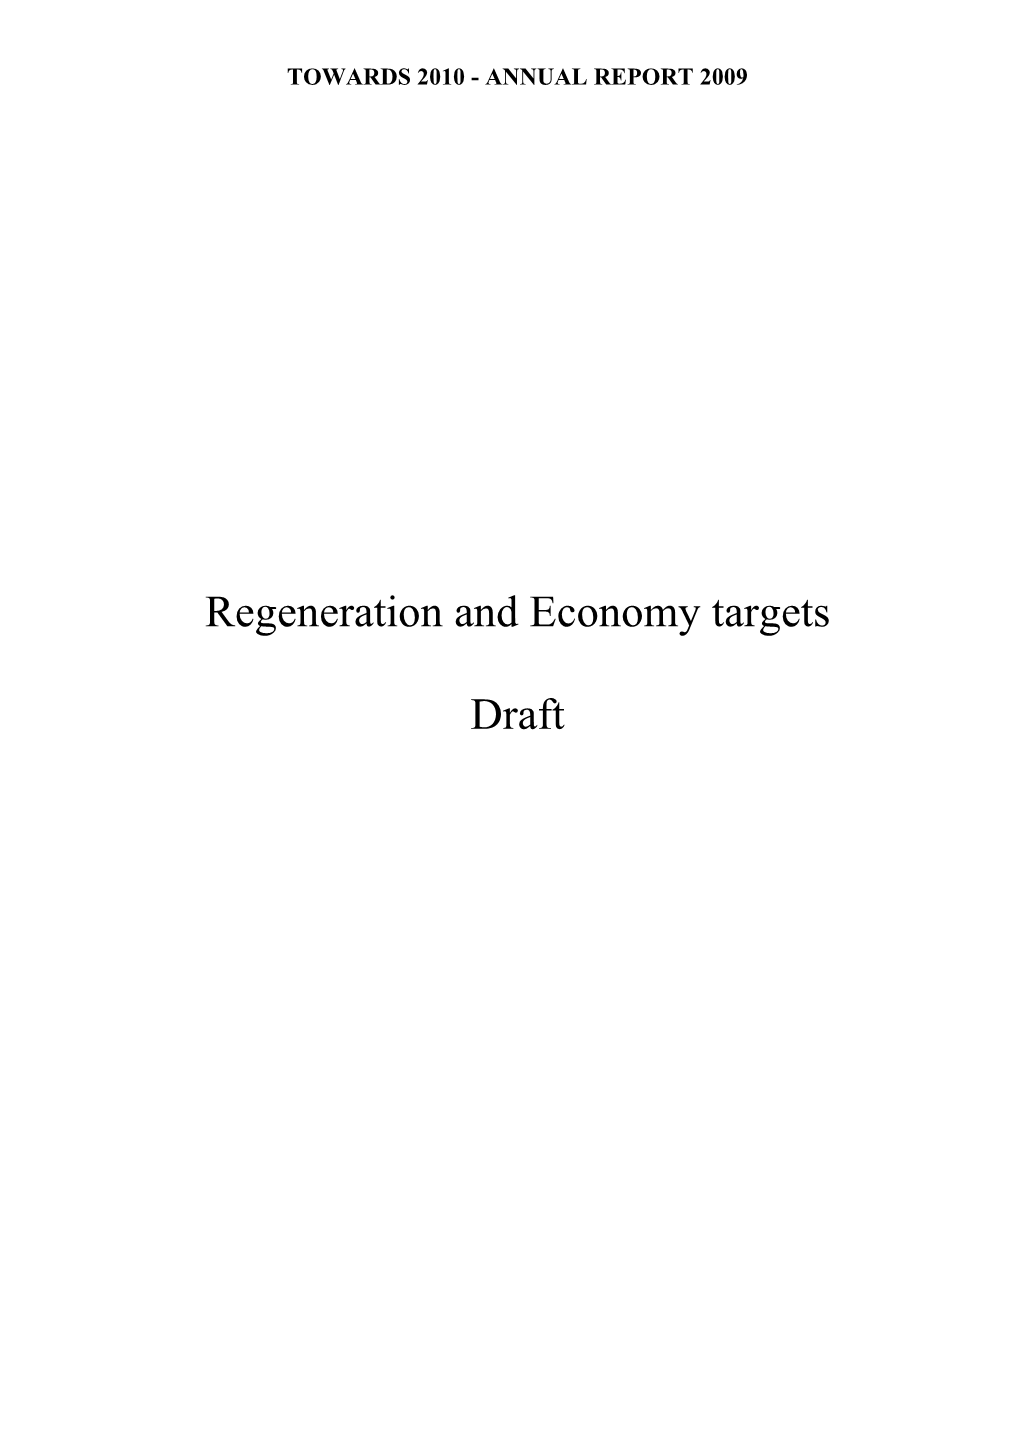 Regeneration and Economy Targets Draft